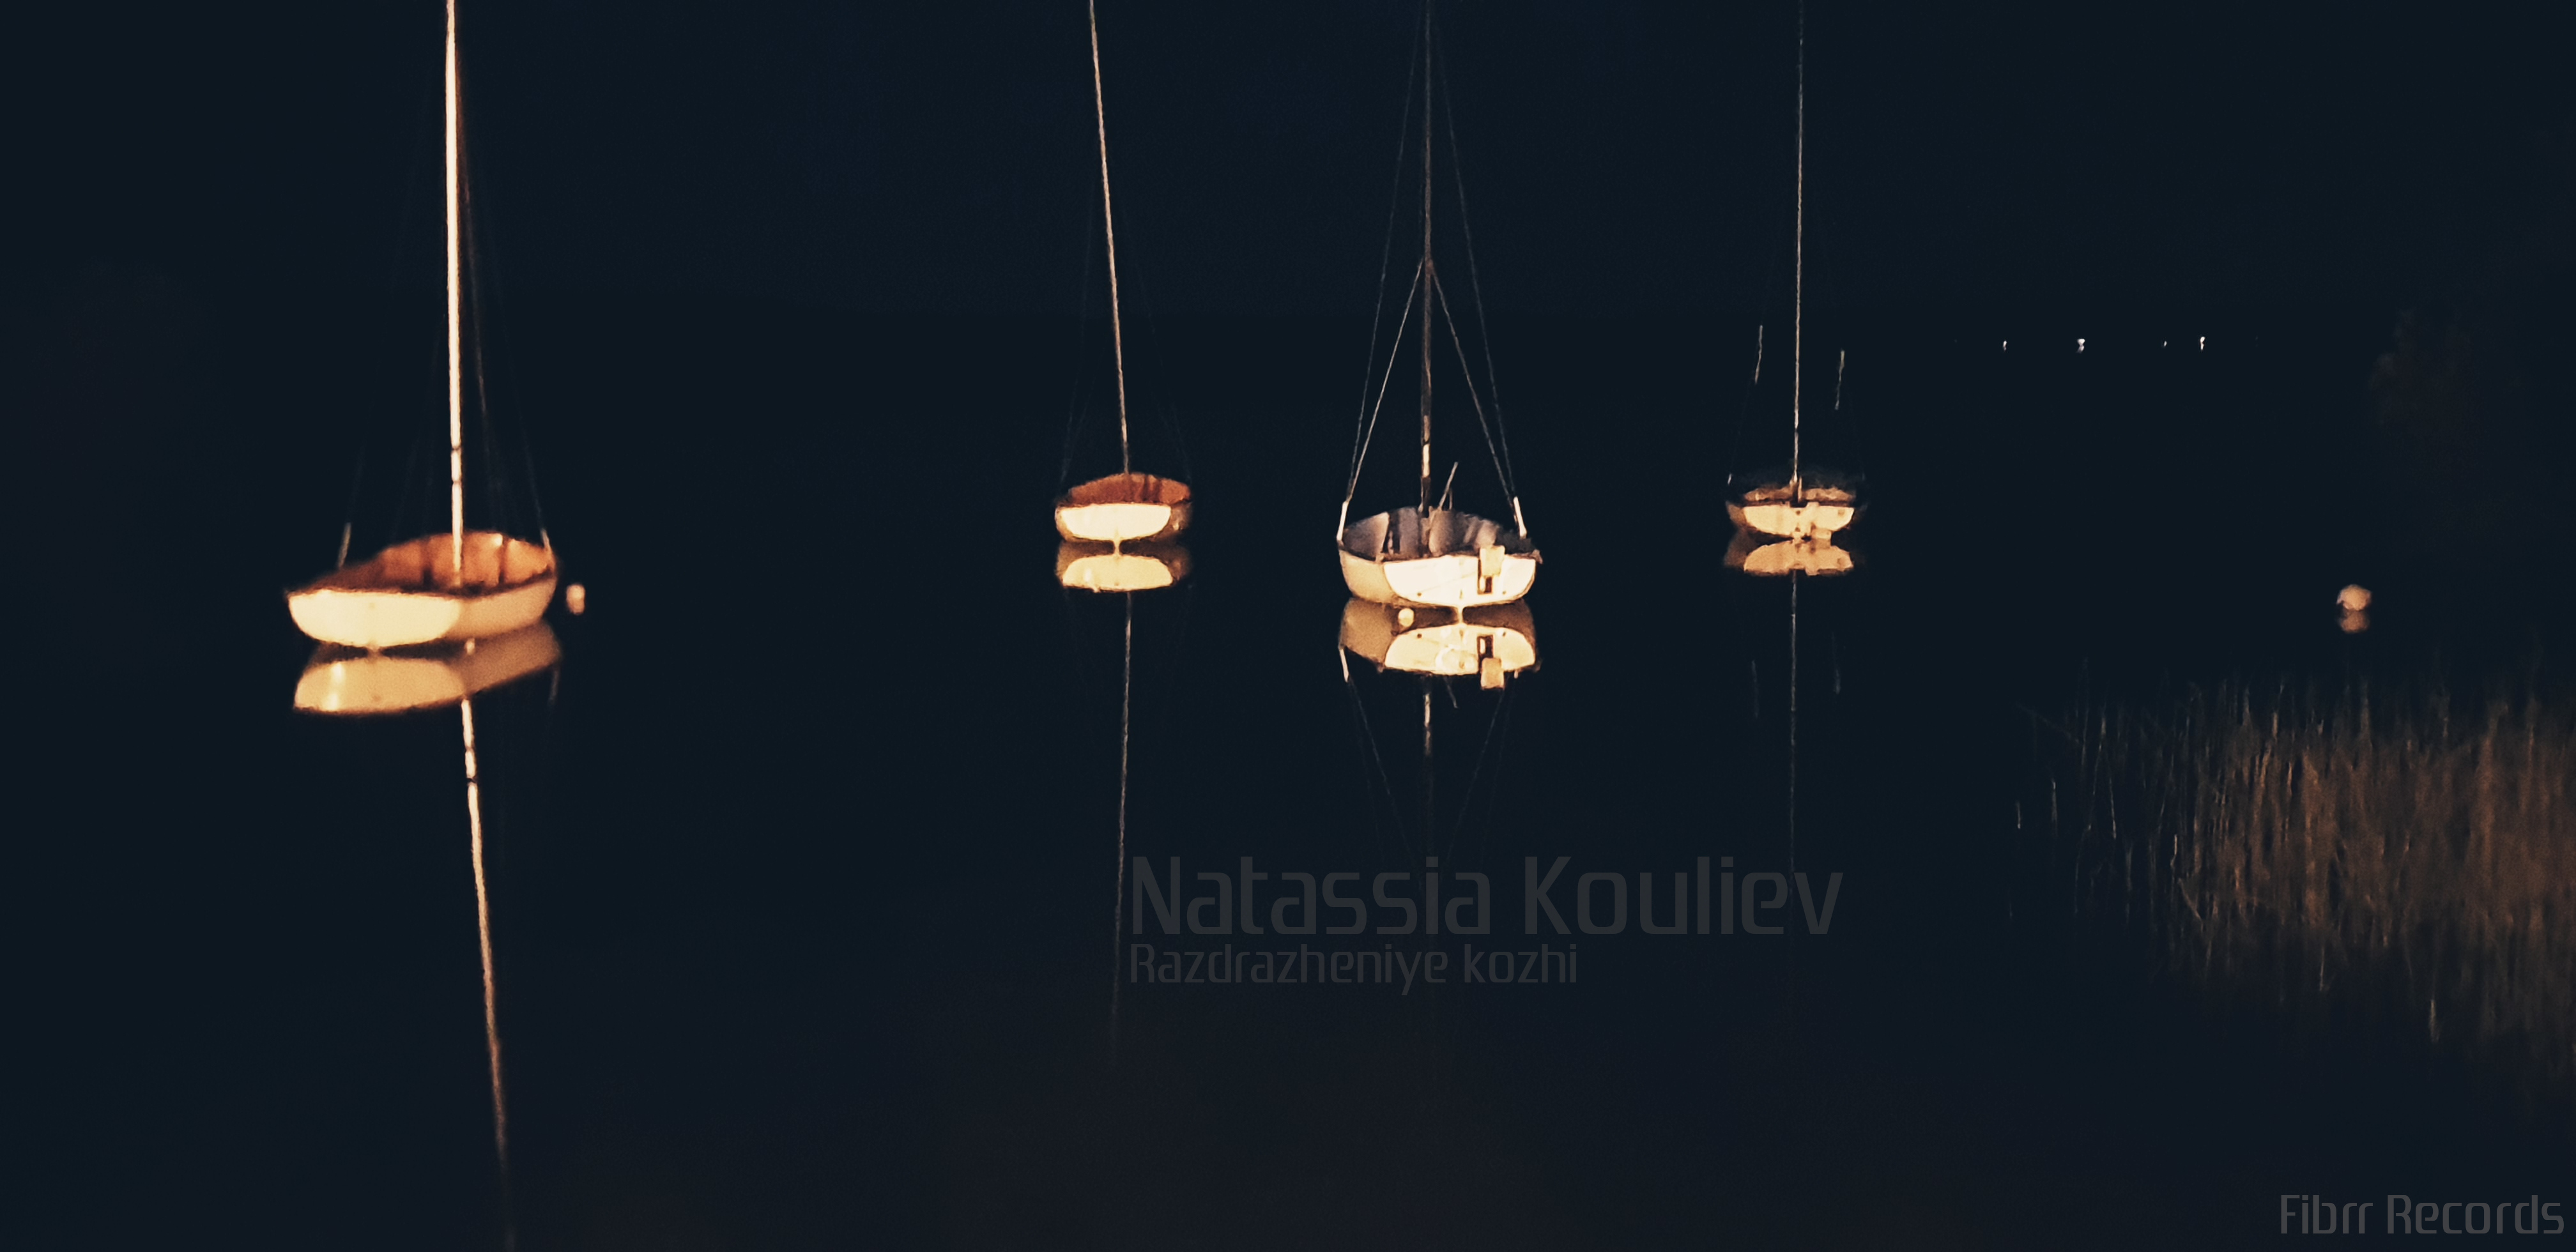 New Fibrr Records Release – NATASSIA KOULIEV – Razdrazheniye kozhi